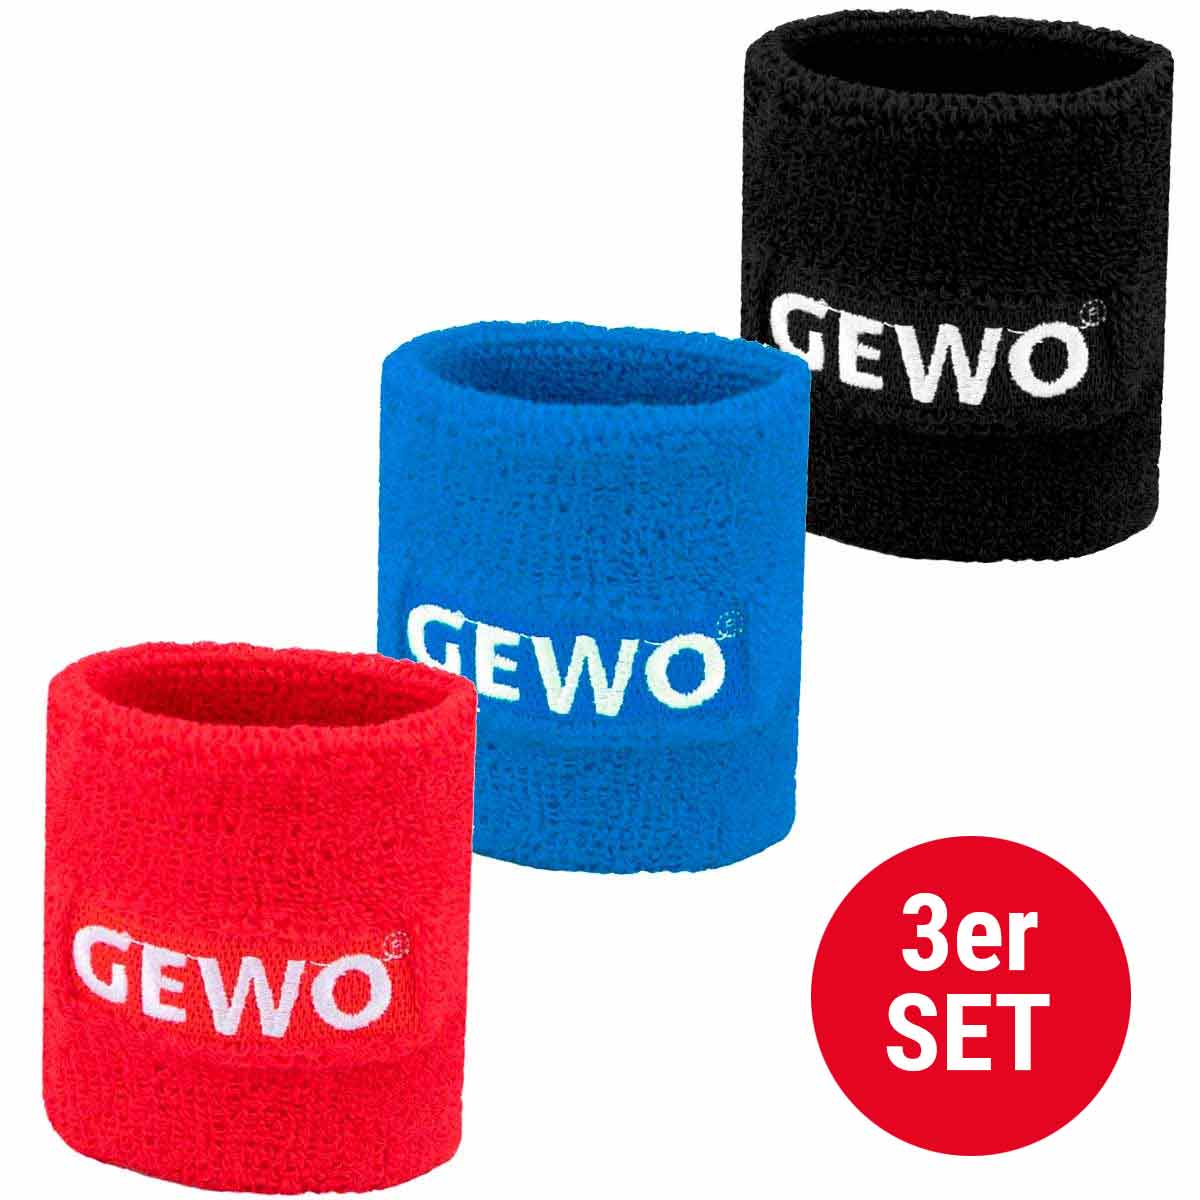 GEWO Set 3x Wrist Band (3 Colours)